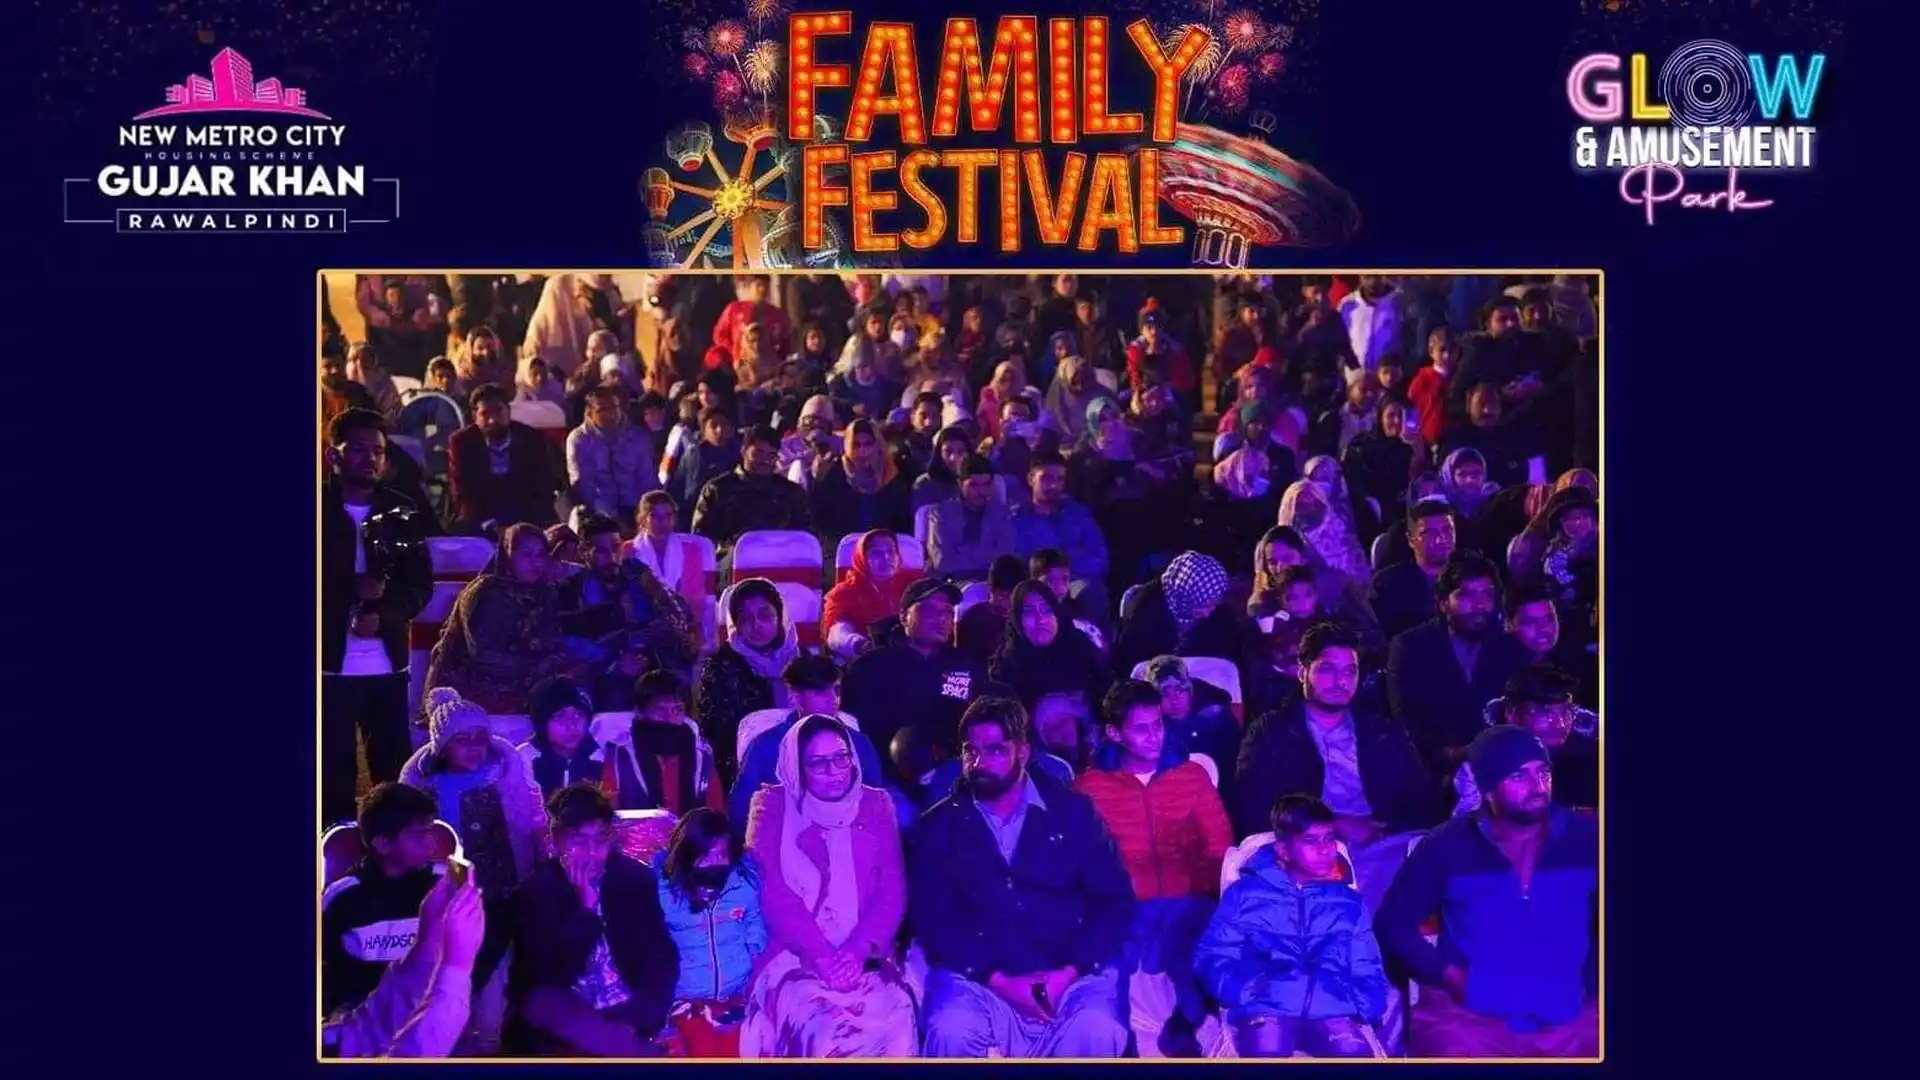 New Metro City Gujar Khan Happy New Year Family Festival